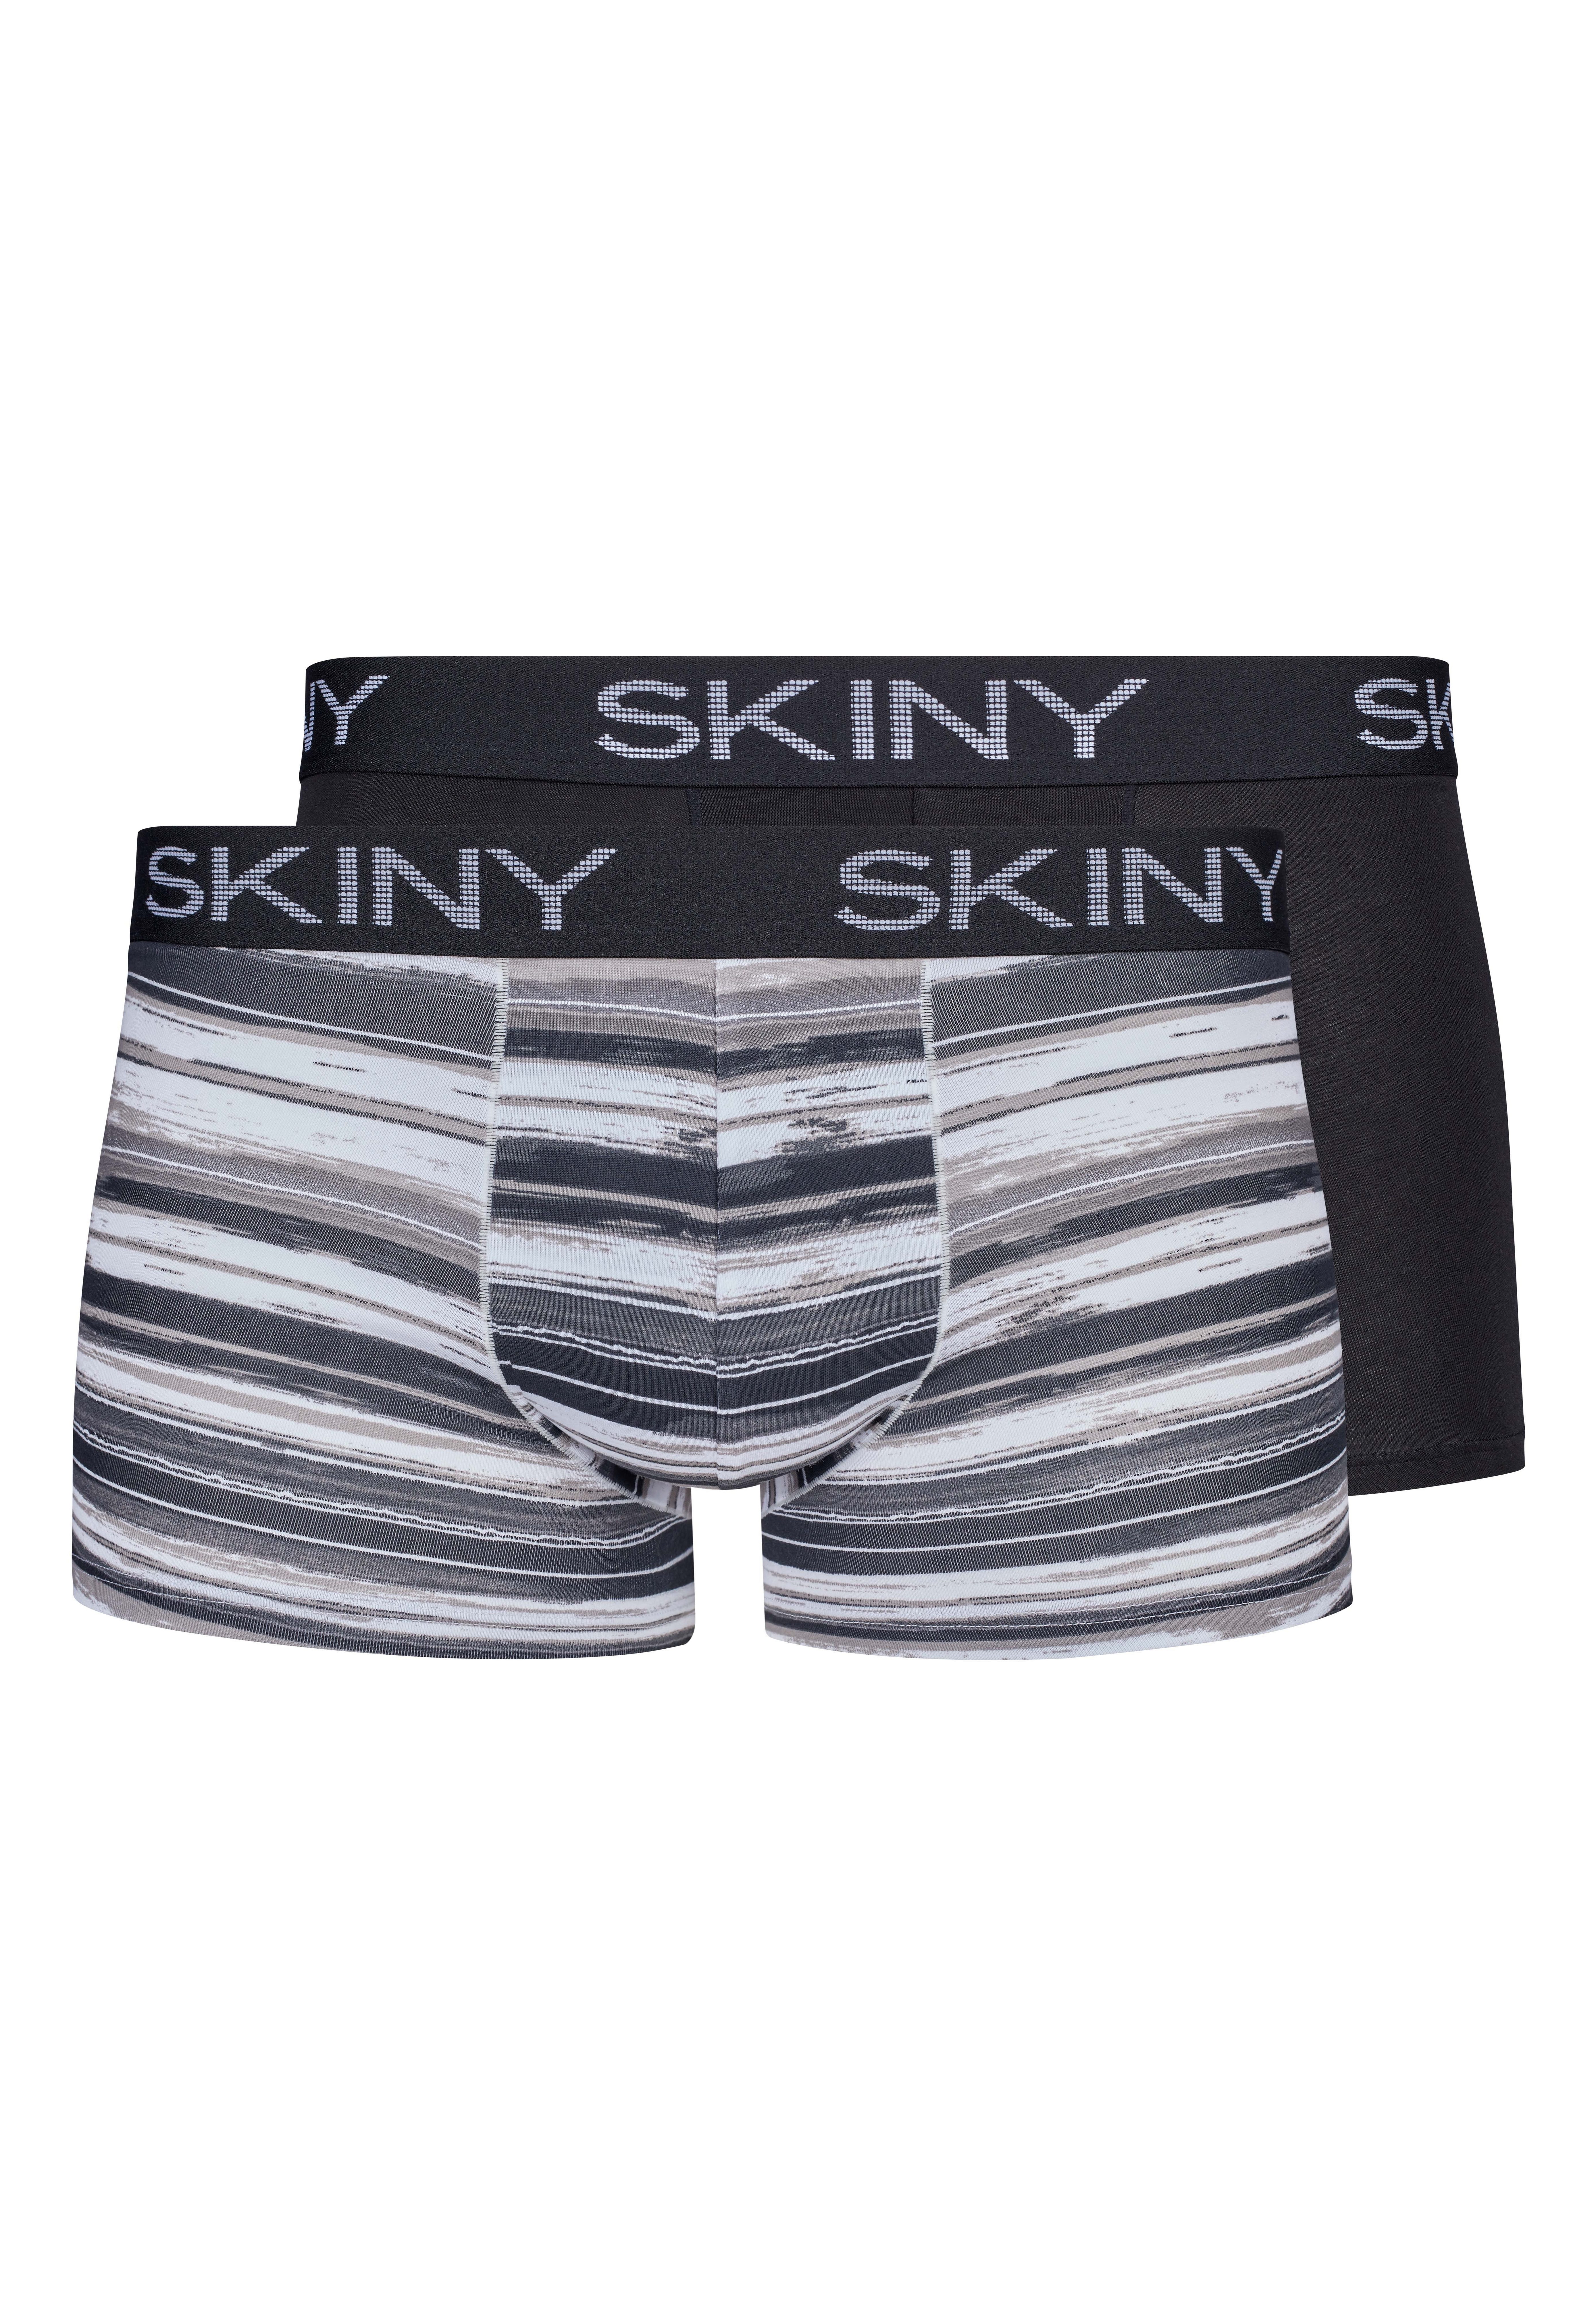 Skiny Retro Pants Doppelpack Herren Boxershorts (2-St) Doppelpack schwarz | schwarz/weiß